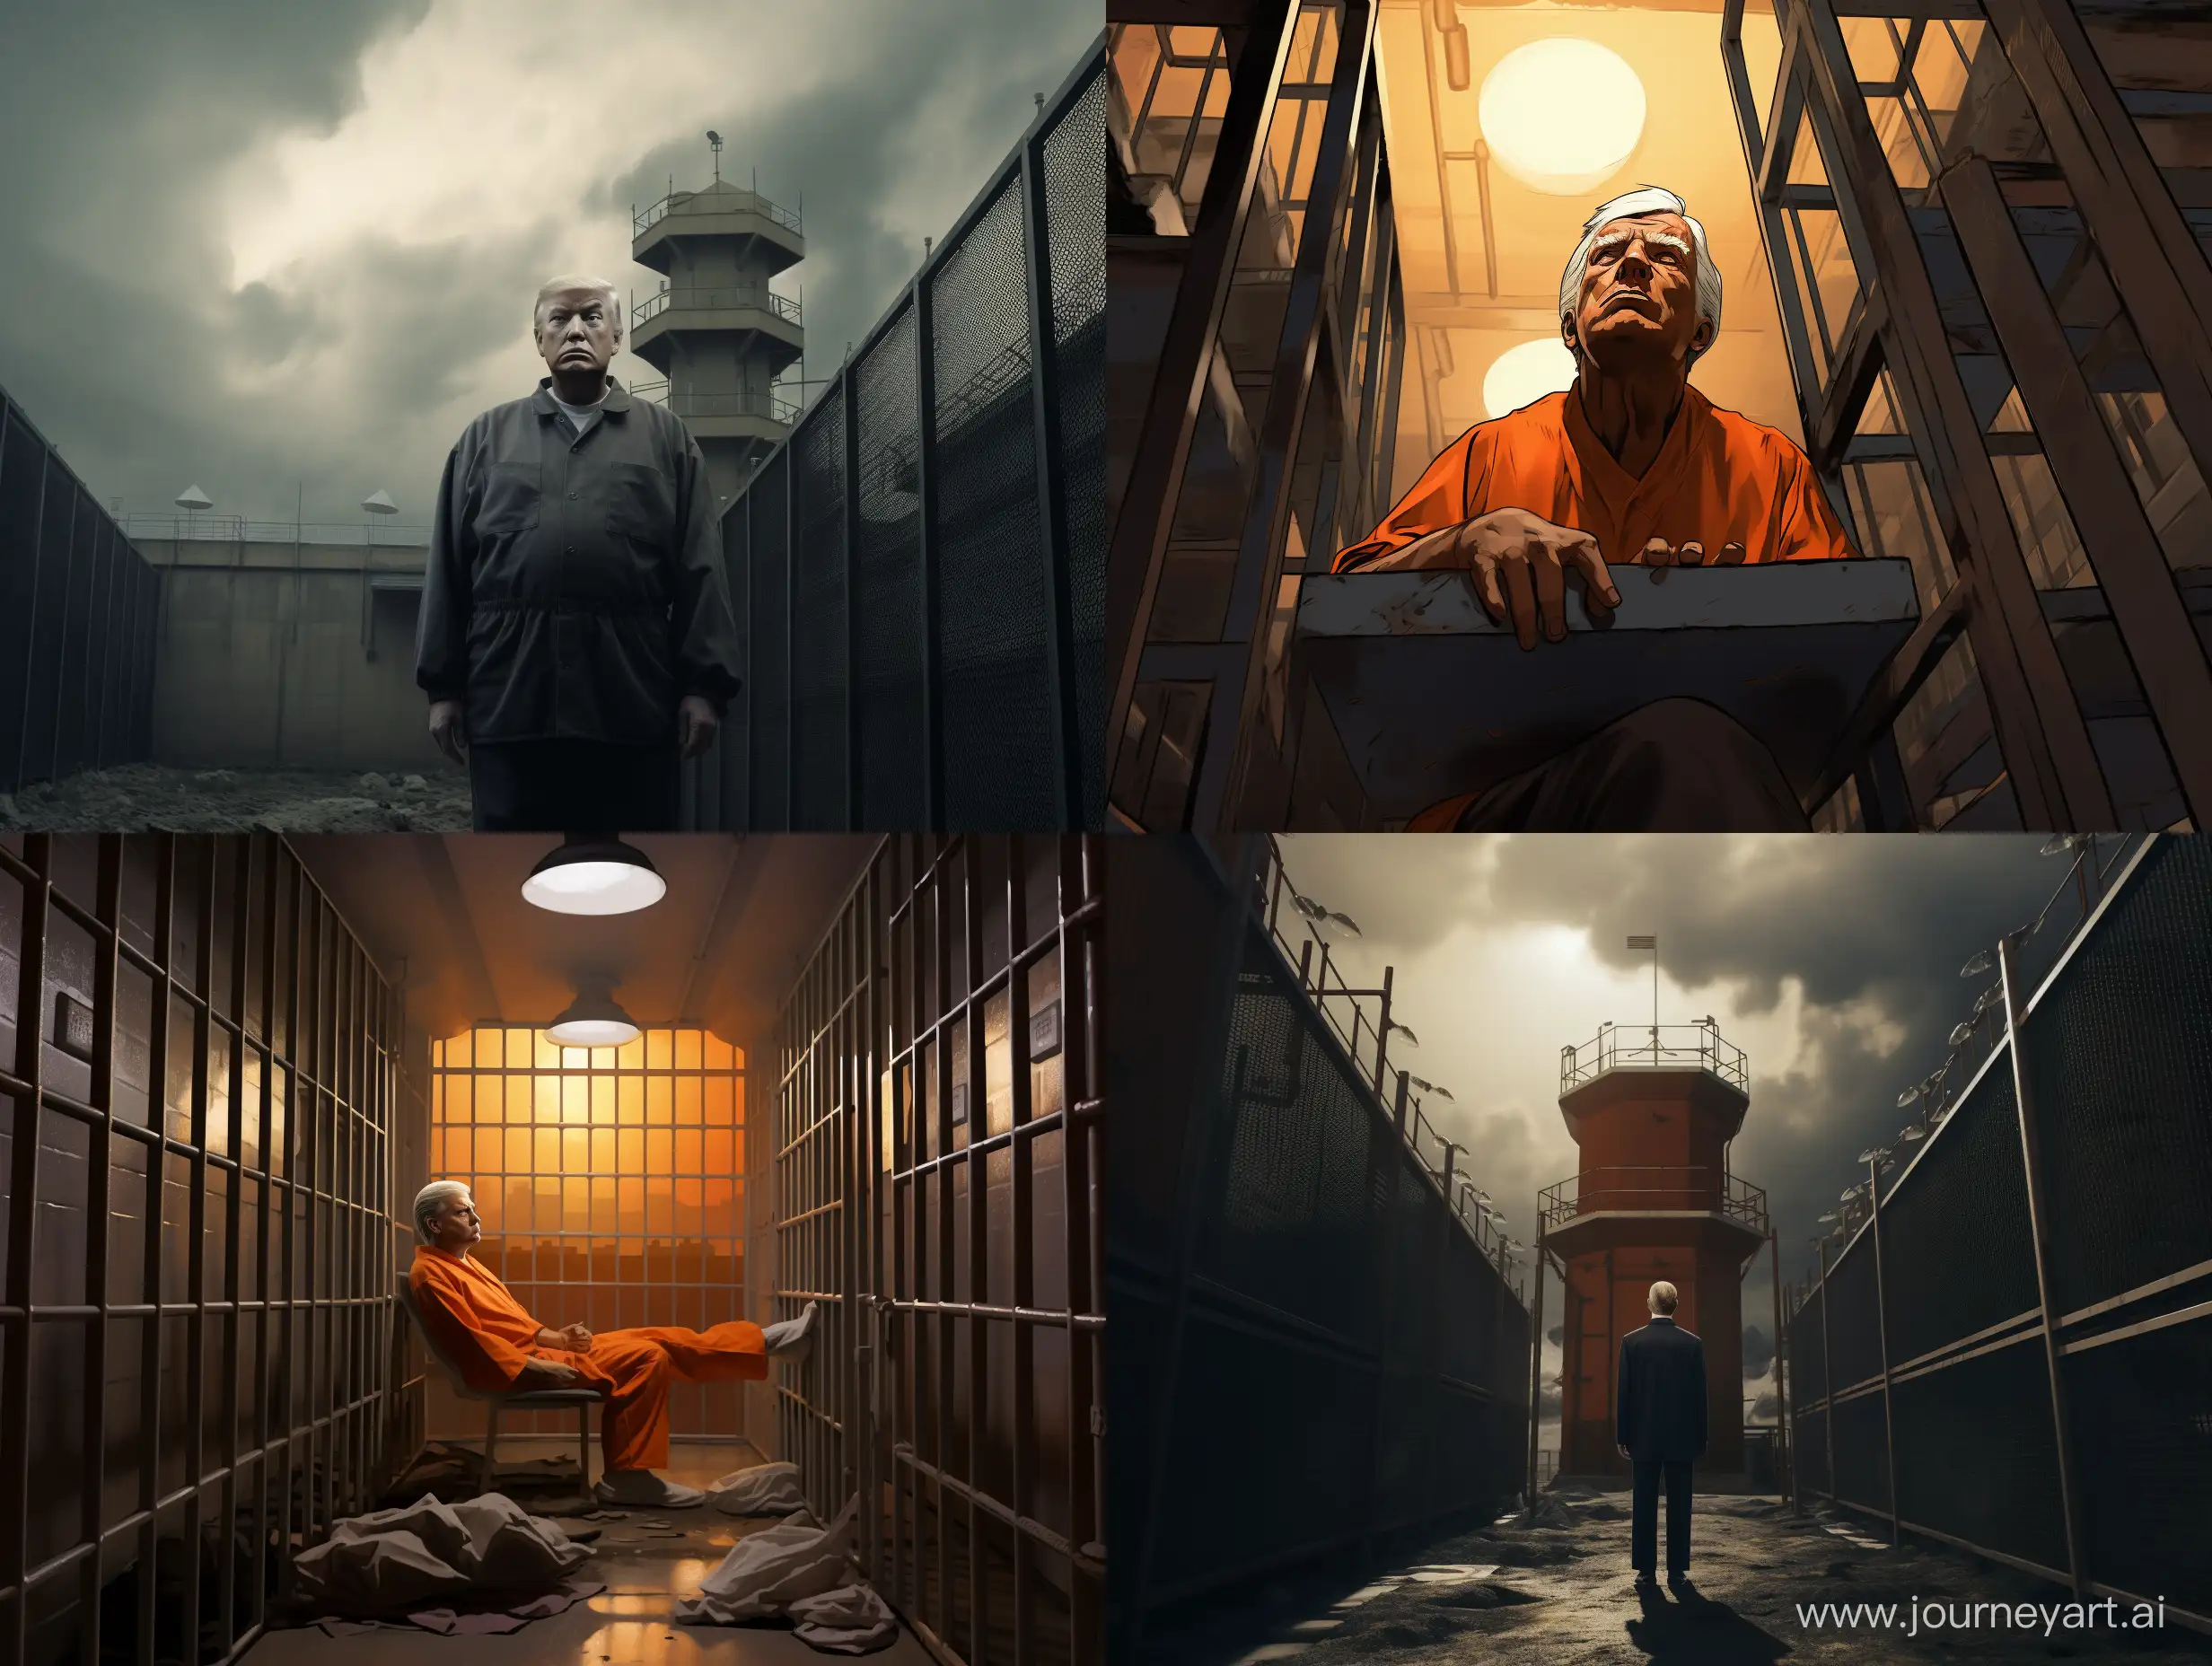 Donald-Trump-in-Prison-Art-Captivating-43-Aspect-Ratio-Illustration